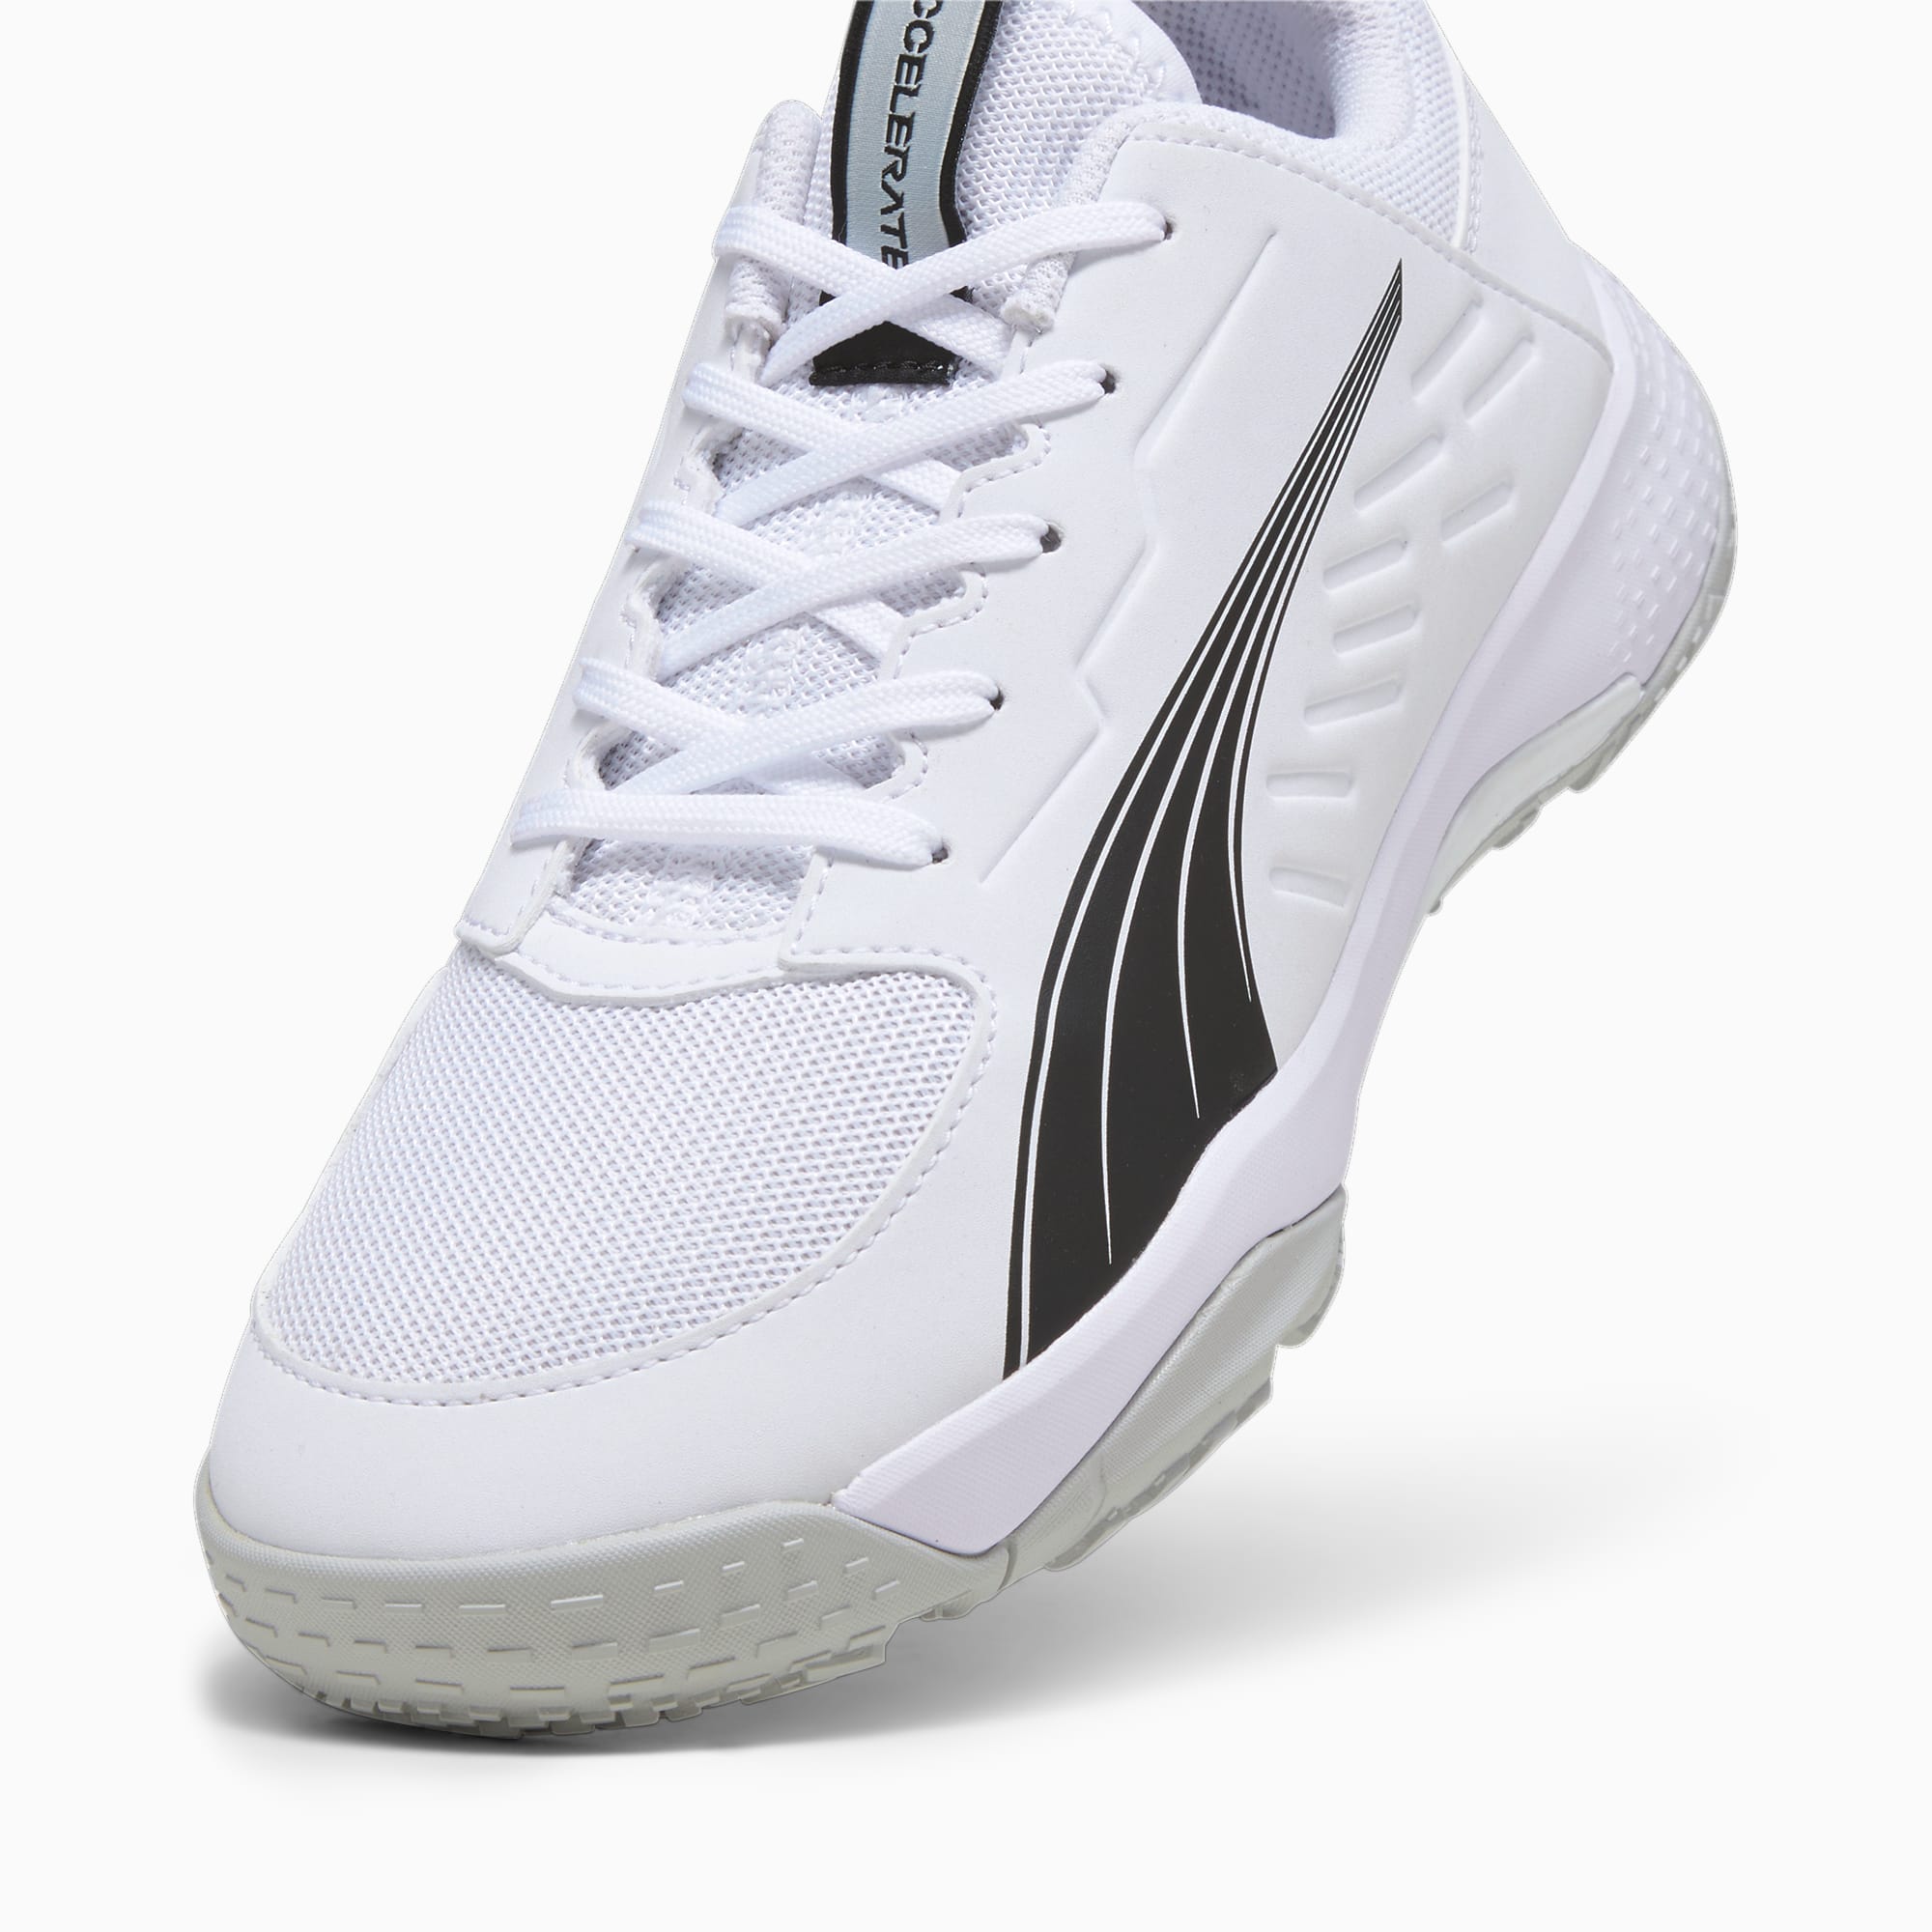 PUMA Accelerate Kids' Handball Shoes, White/Black/Concrete Grey, Size 33, Shoes